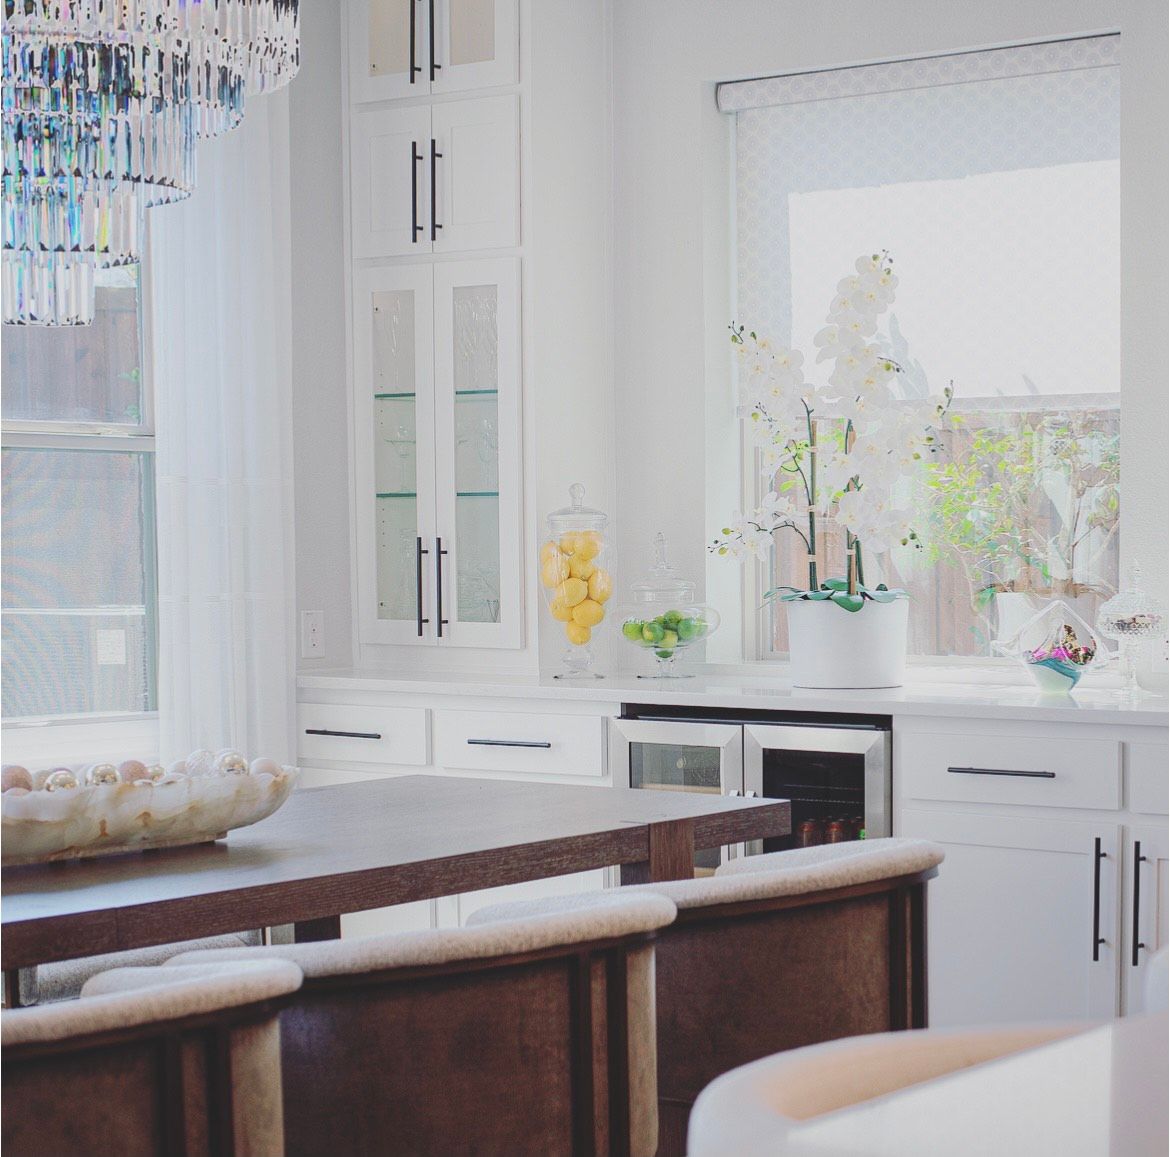 Designs-By-Keti-Dallas-Timeless-Luxury-Kitchen-Cabinet-Styles-White-Kitchen-Backsplash-Large-Island kitchen cabinets